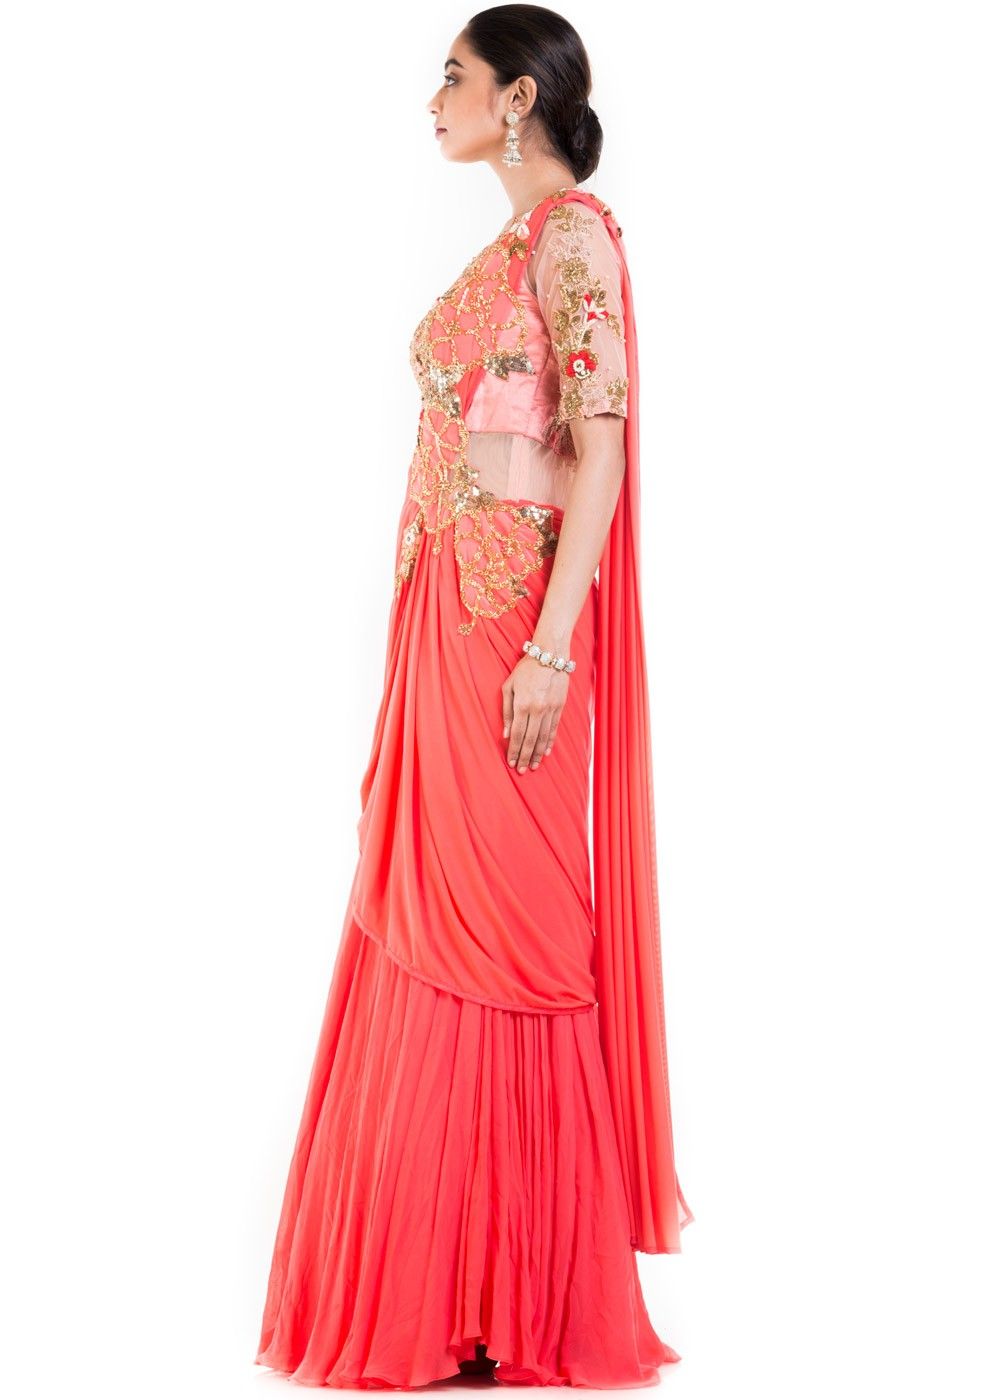 Aishwarya Rajesh Chic Stunning Outfits And Looks - K4 Fashion